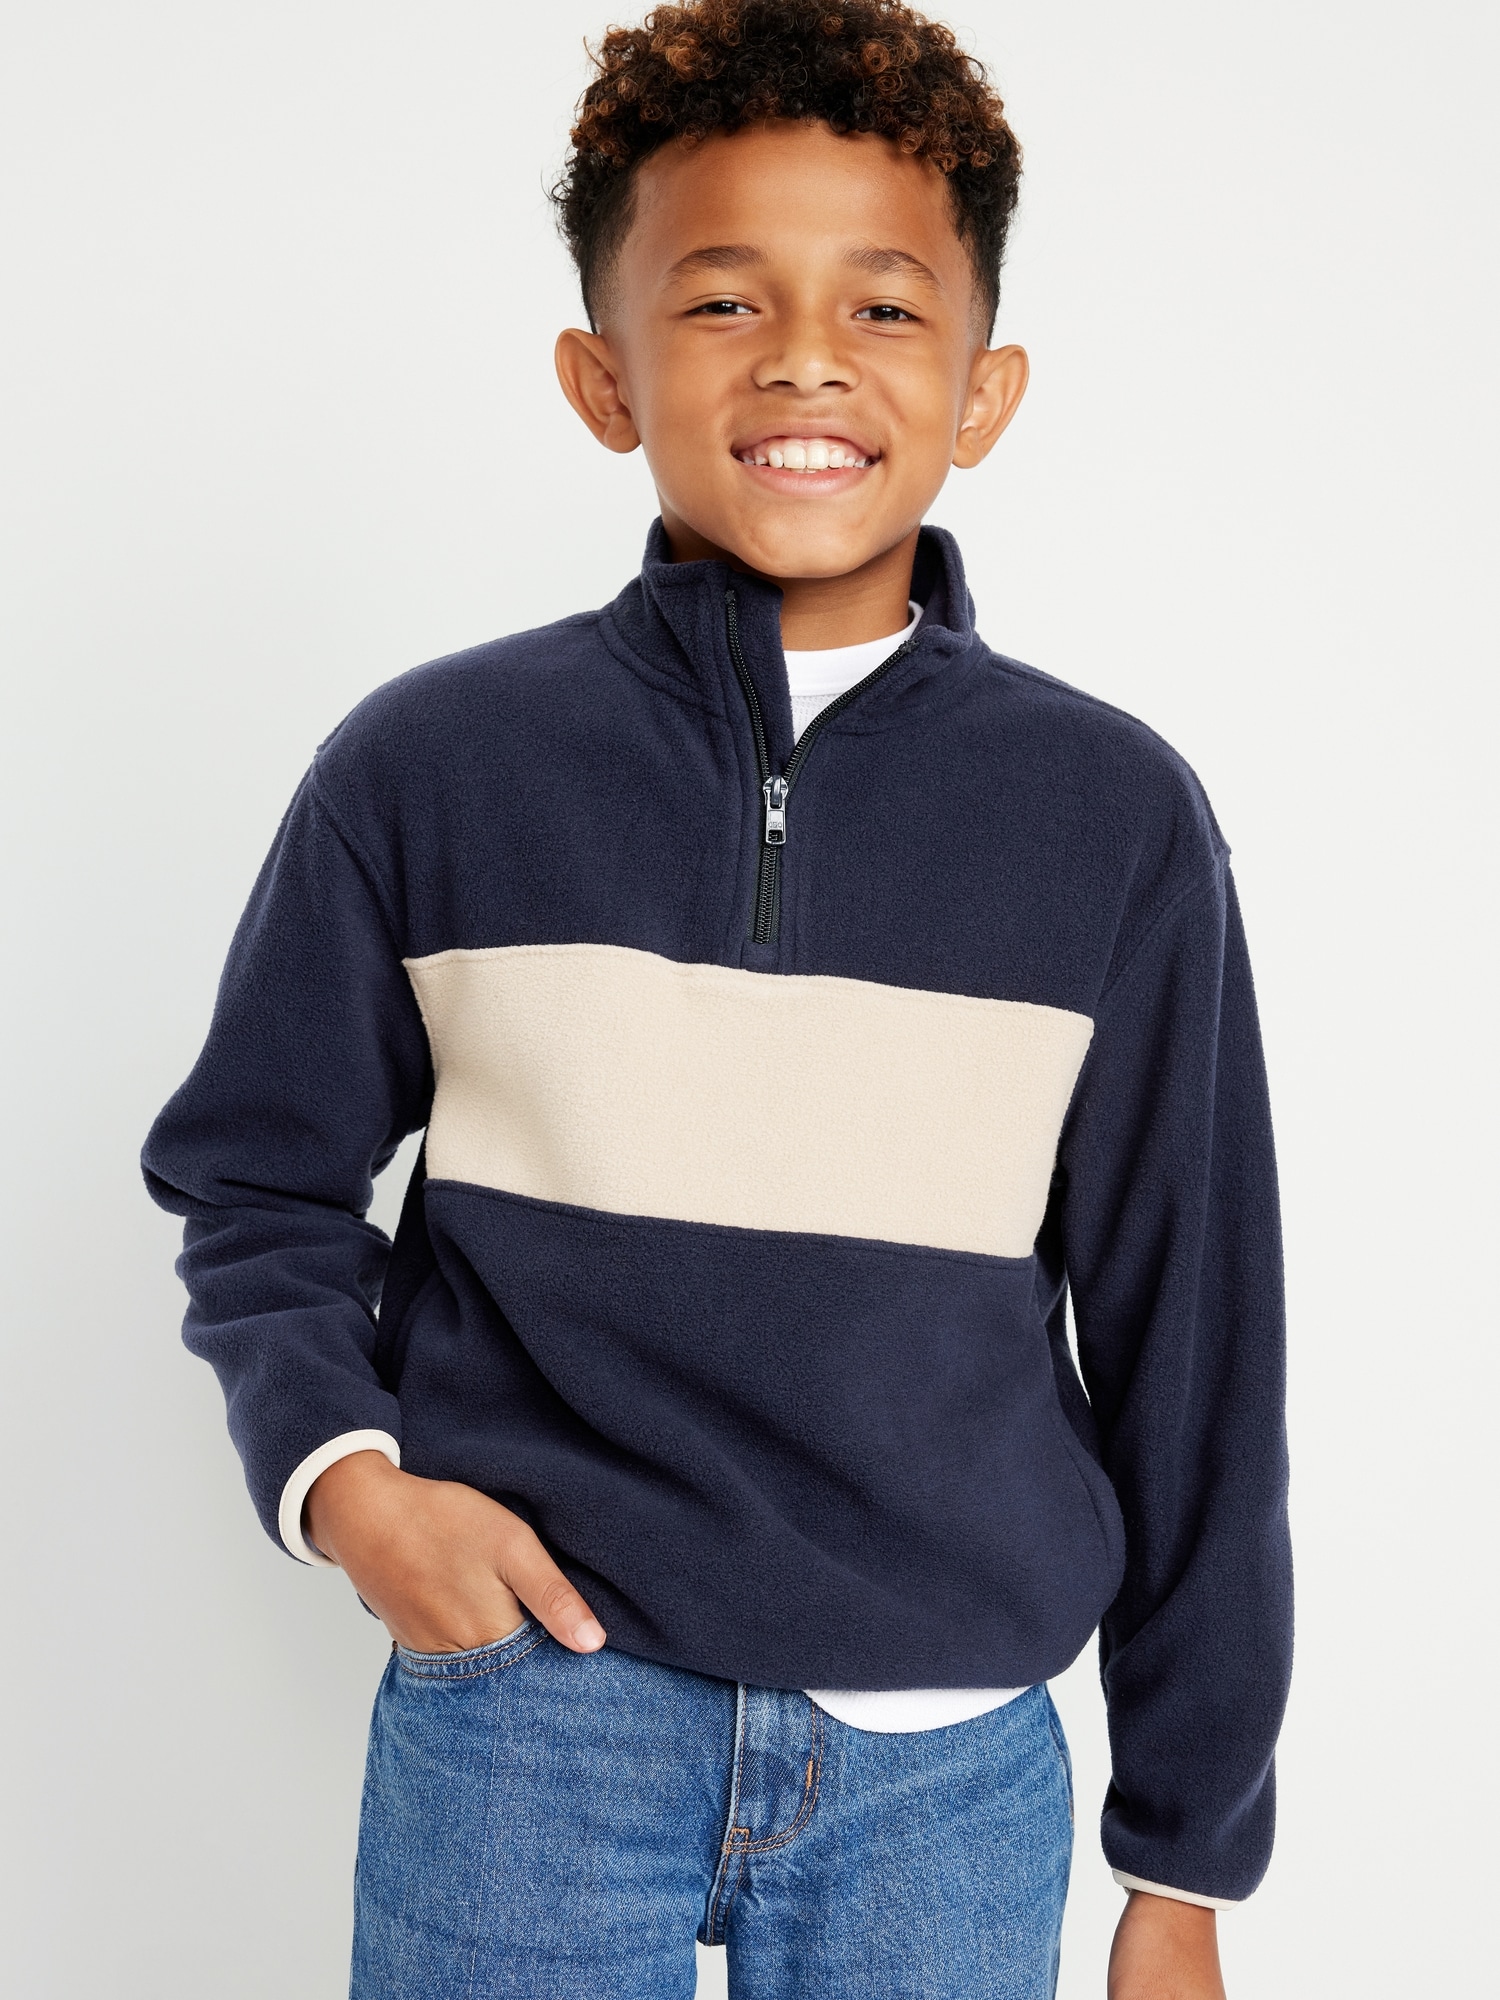 Long-Sleeve Quarter-Zip Microfleece Sweater for Boys